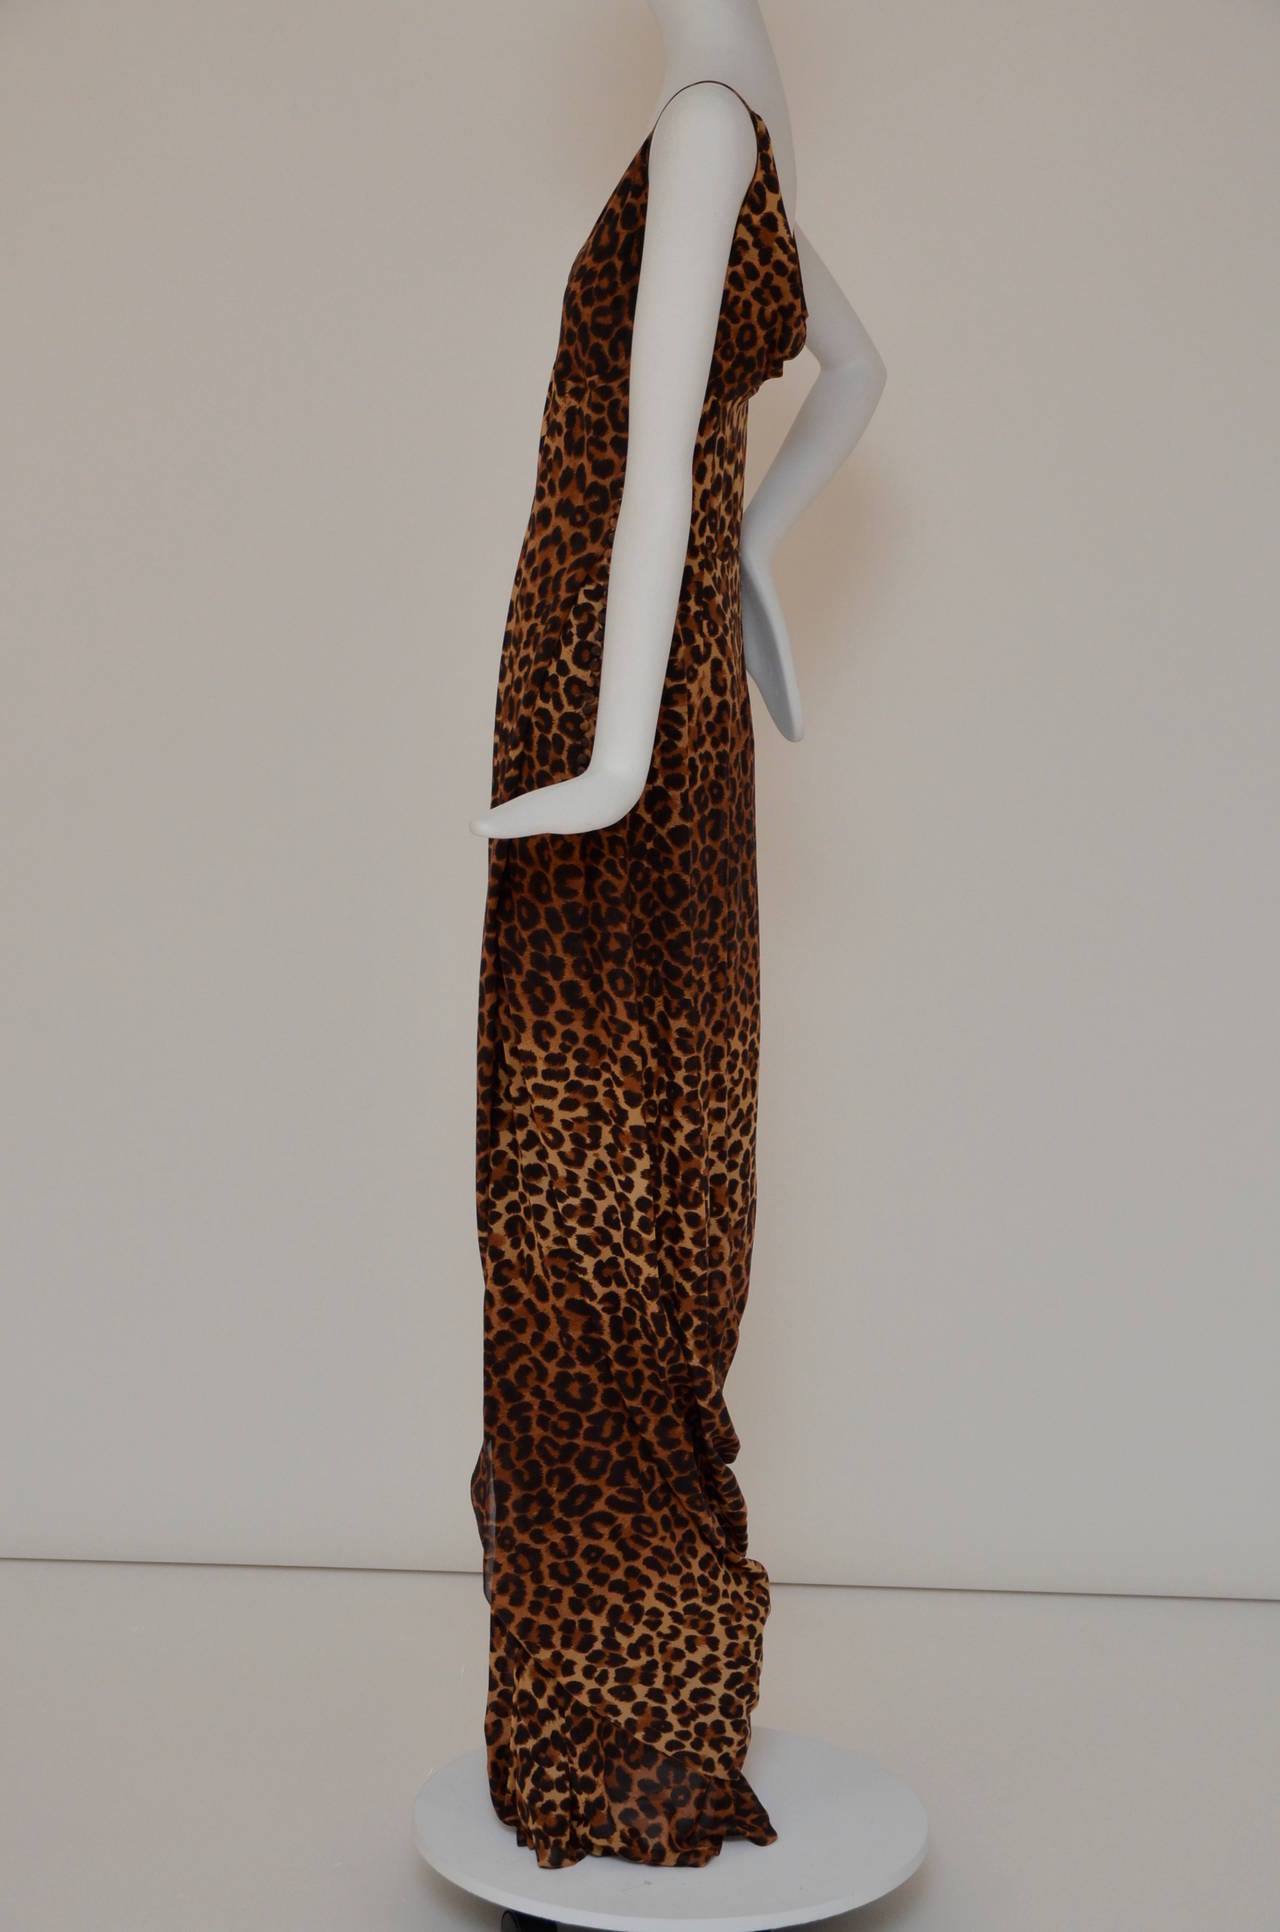 John Galliano animal print dress.
Size 4US.
Made in france.
Fabric 100% silk.
Dress measurements:underarm 17.5